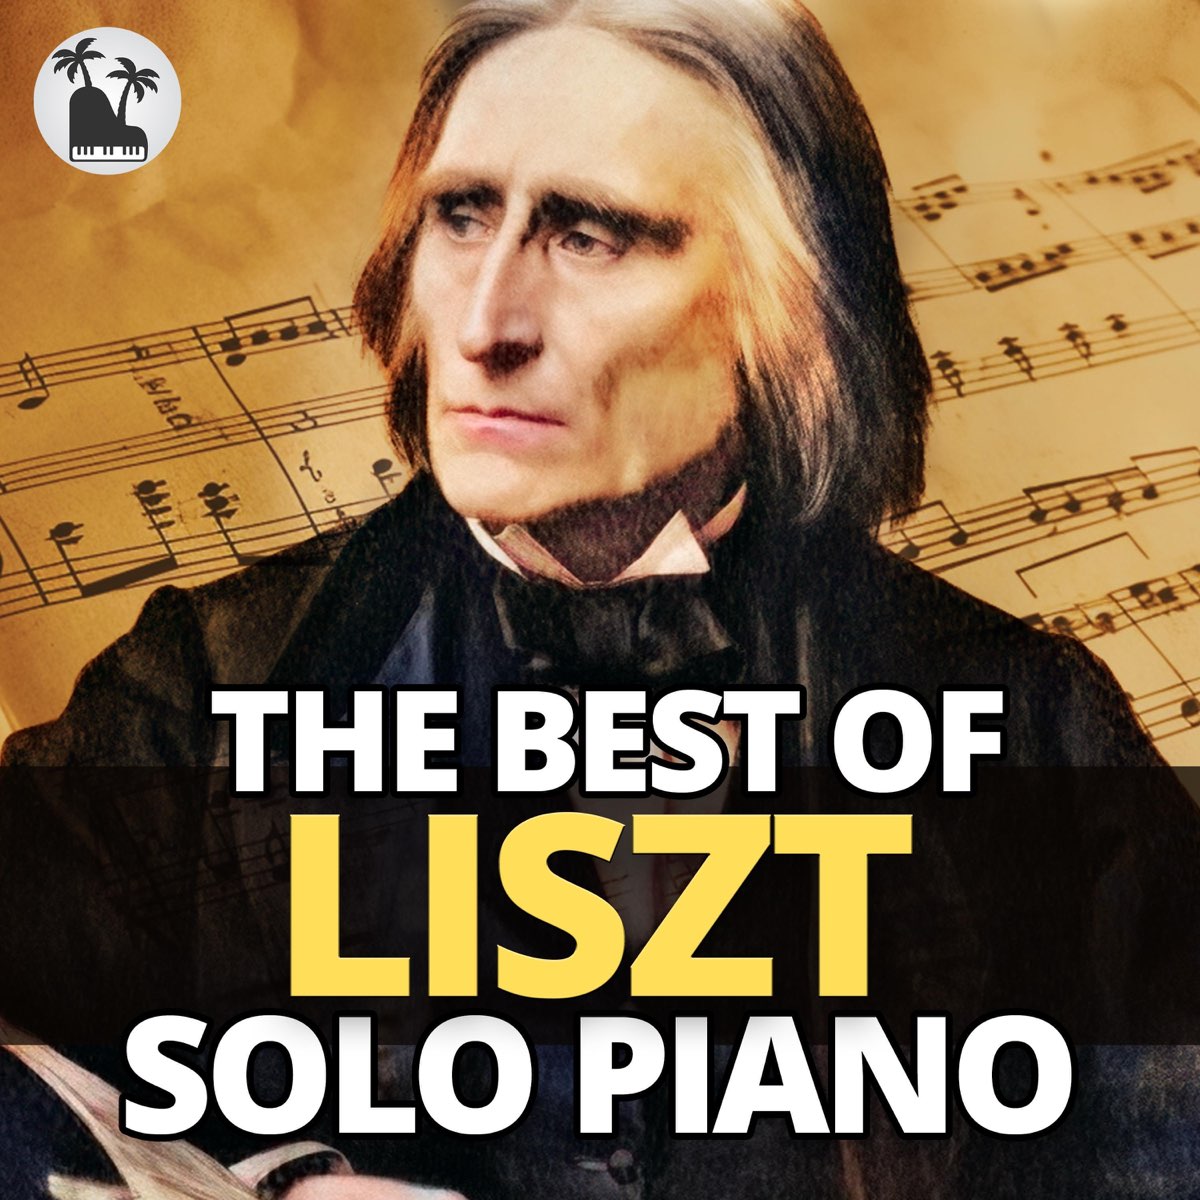 The Best of Liszt Solo Piano - Album by Fatjon Zefi - Apple Music